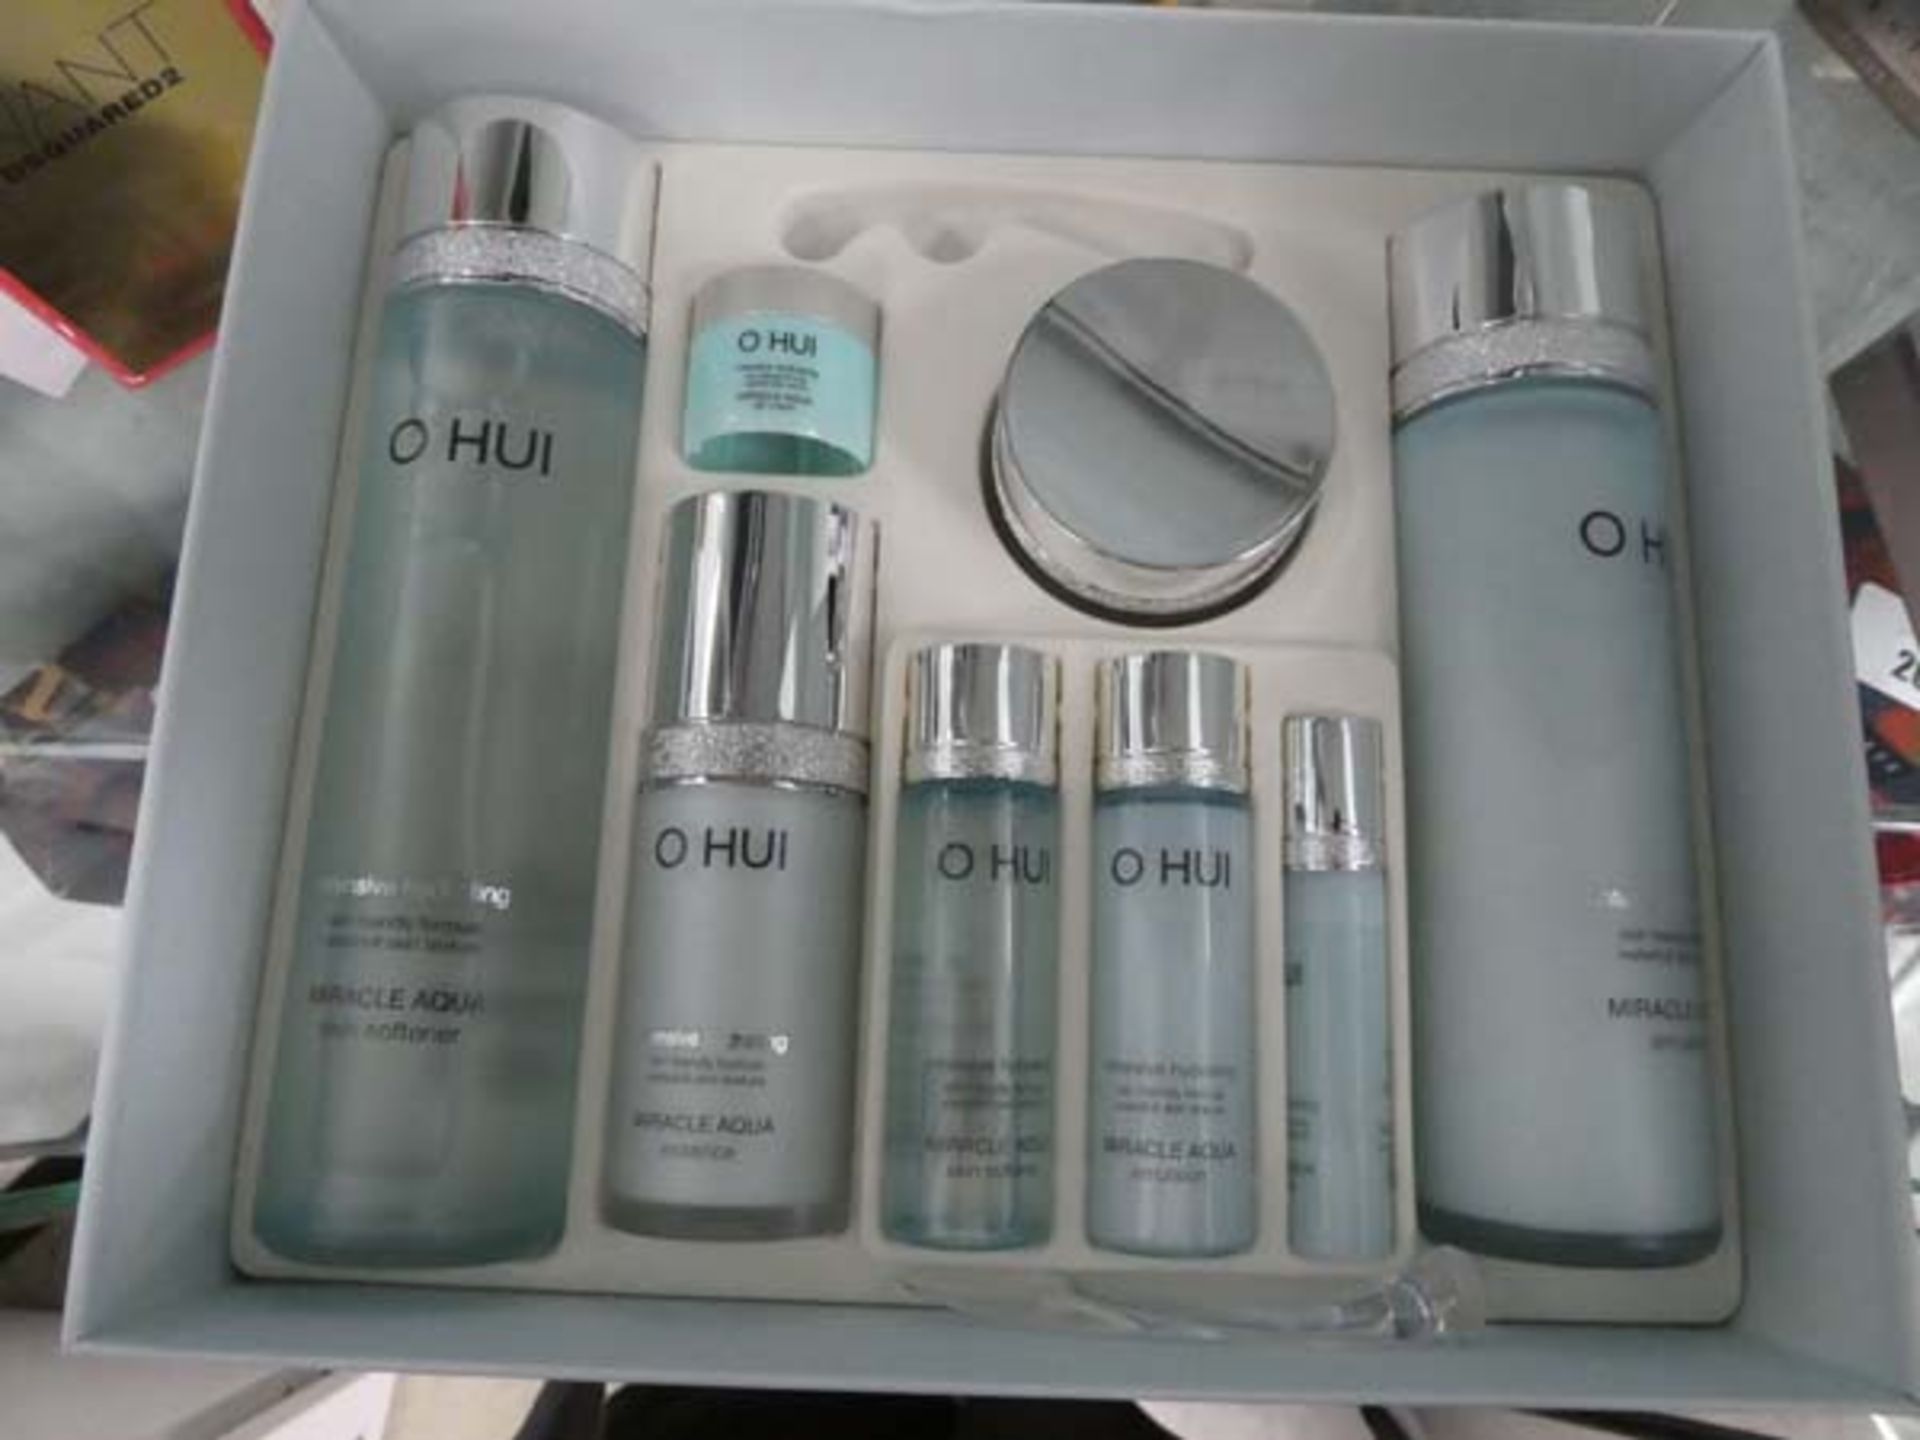 O Hui intensive hydrating skin friendly formula set with Miracle Aqua including skin softener,